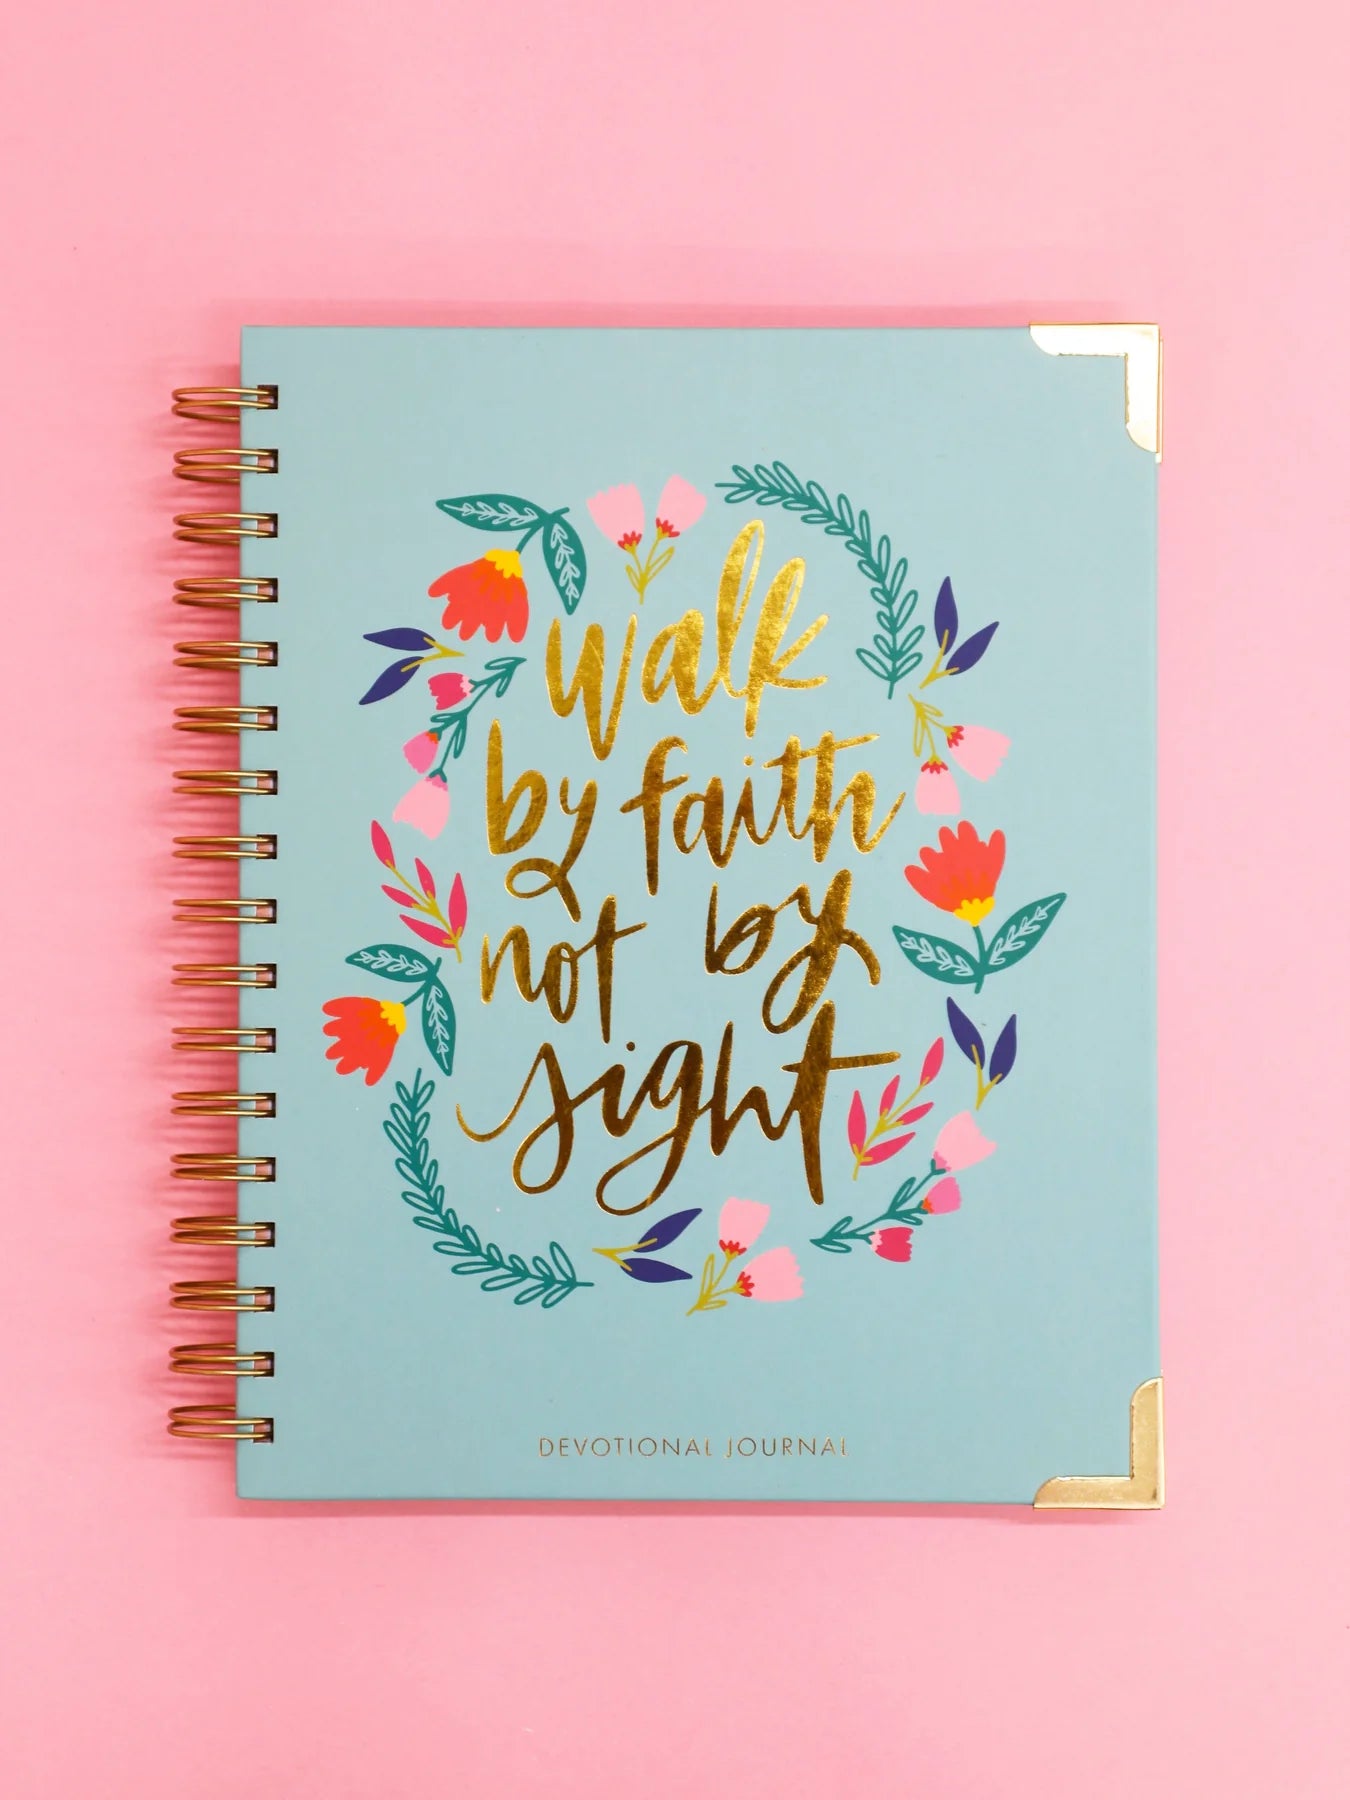 Devotional Journal | Walk By Faith